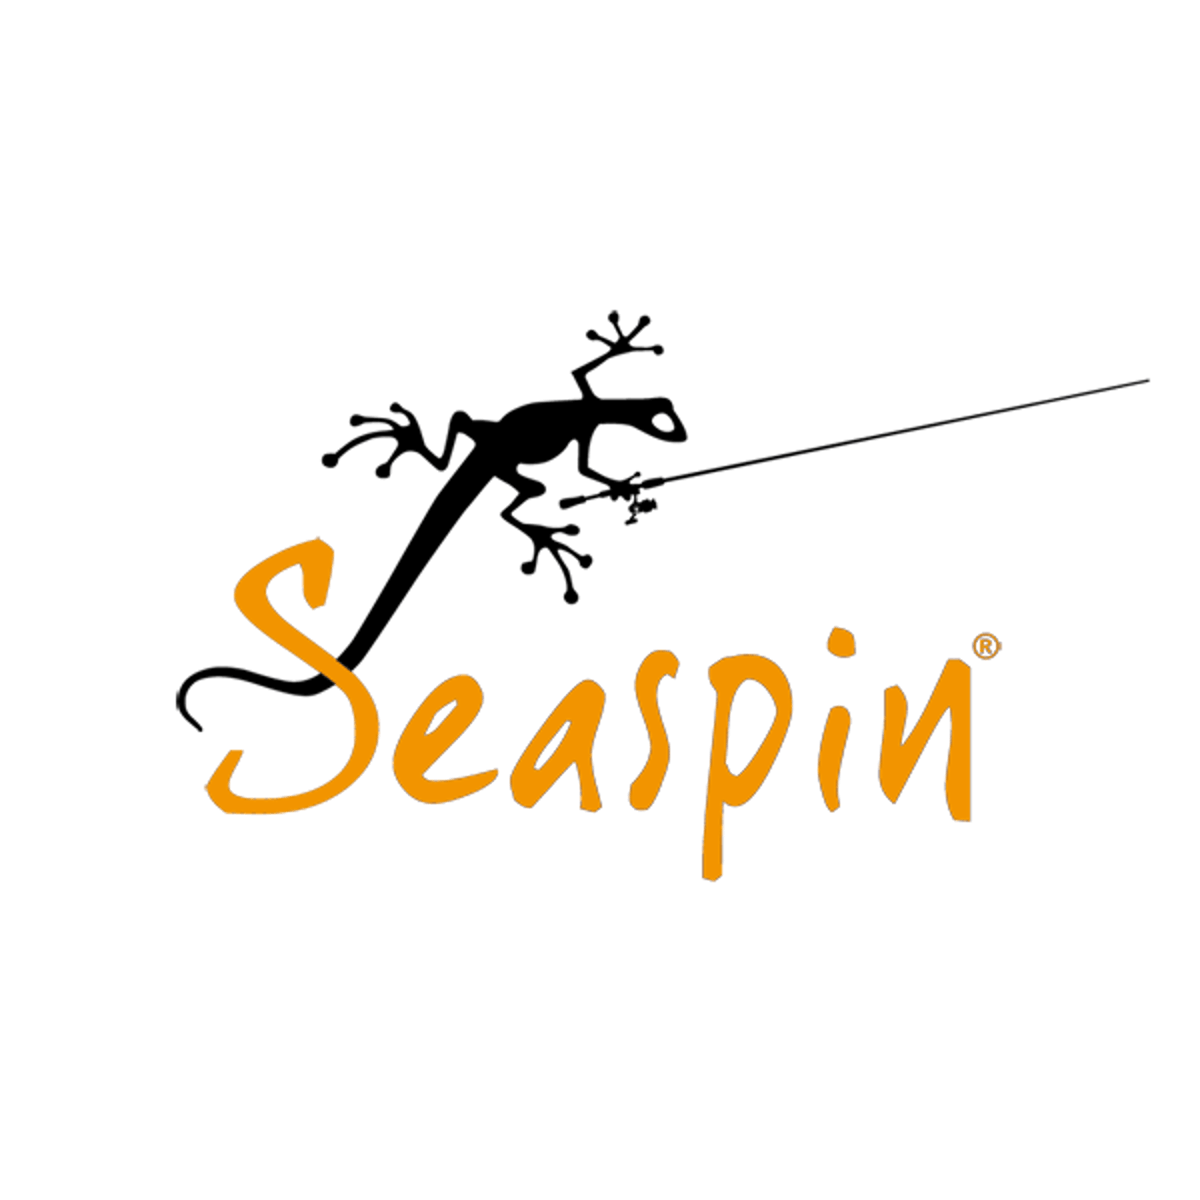 seaspin logo 1